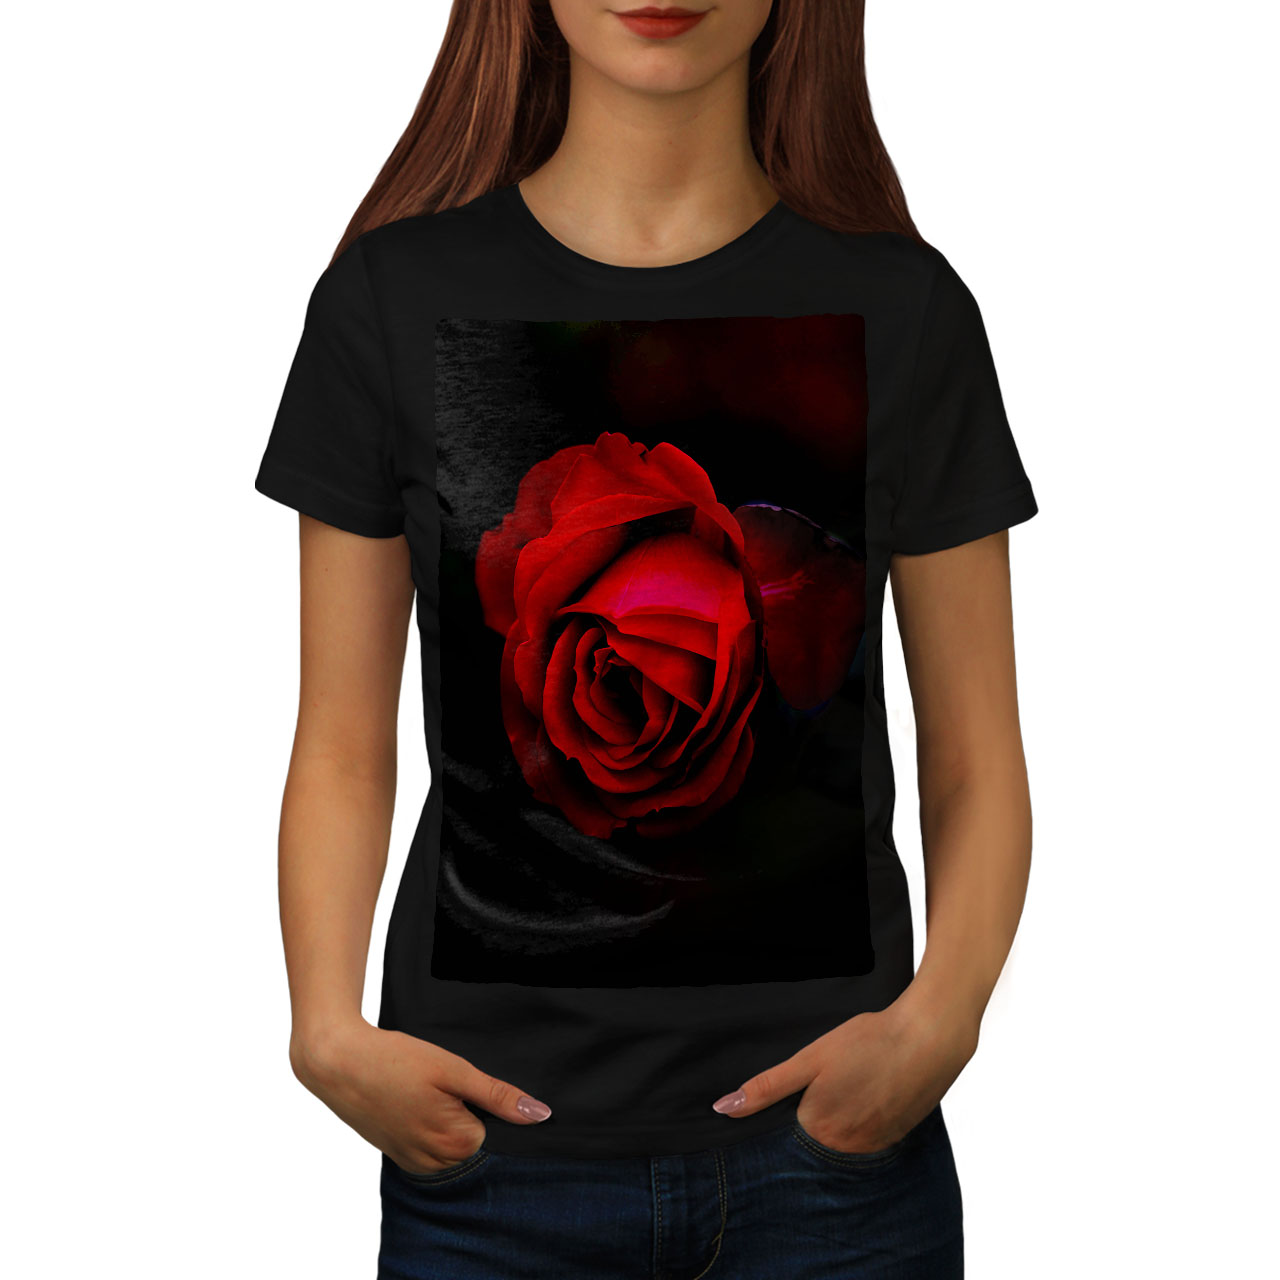 red rose printed shirt